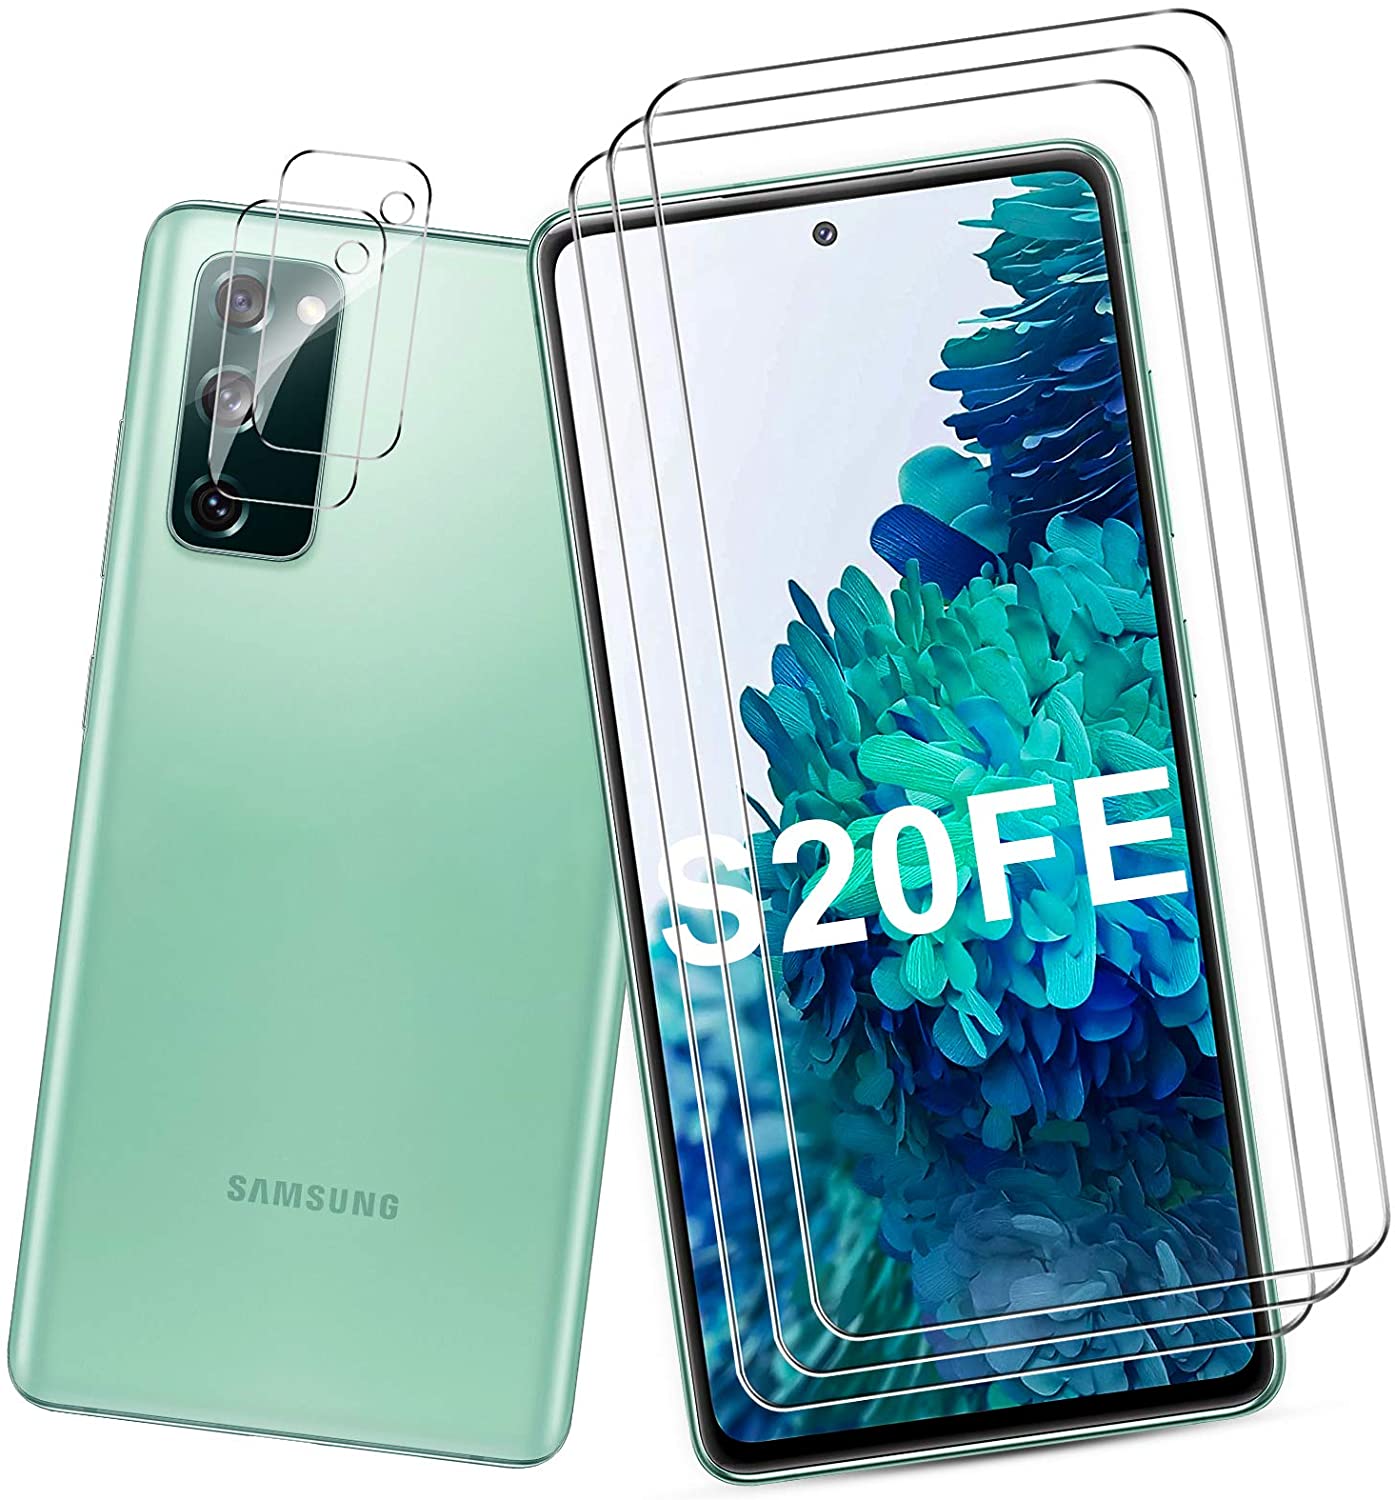 Samsung s20 fe 8. Samsung Galaxy s20 Fe. Samsung Galaxy s20 Fe 5g. Samsung Galaxy 20 Fe. Самсунг галакси с 20 Фе.